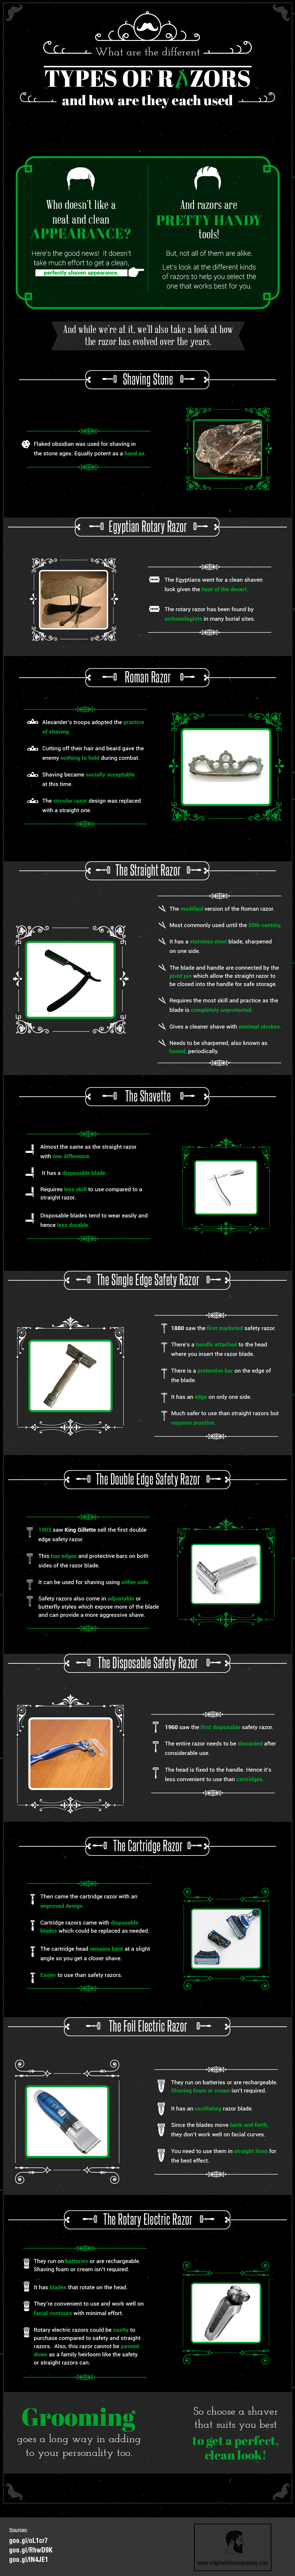 Different types of razors infographic